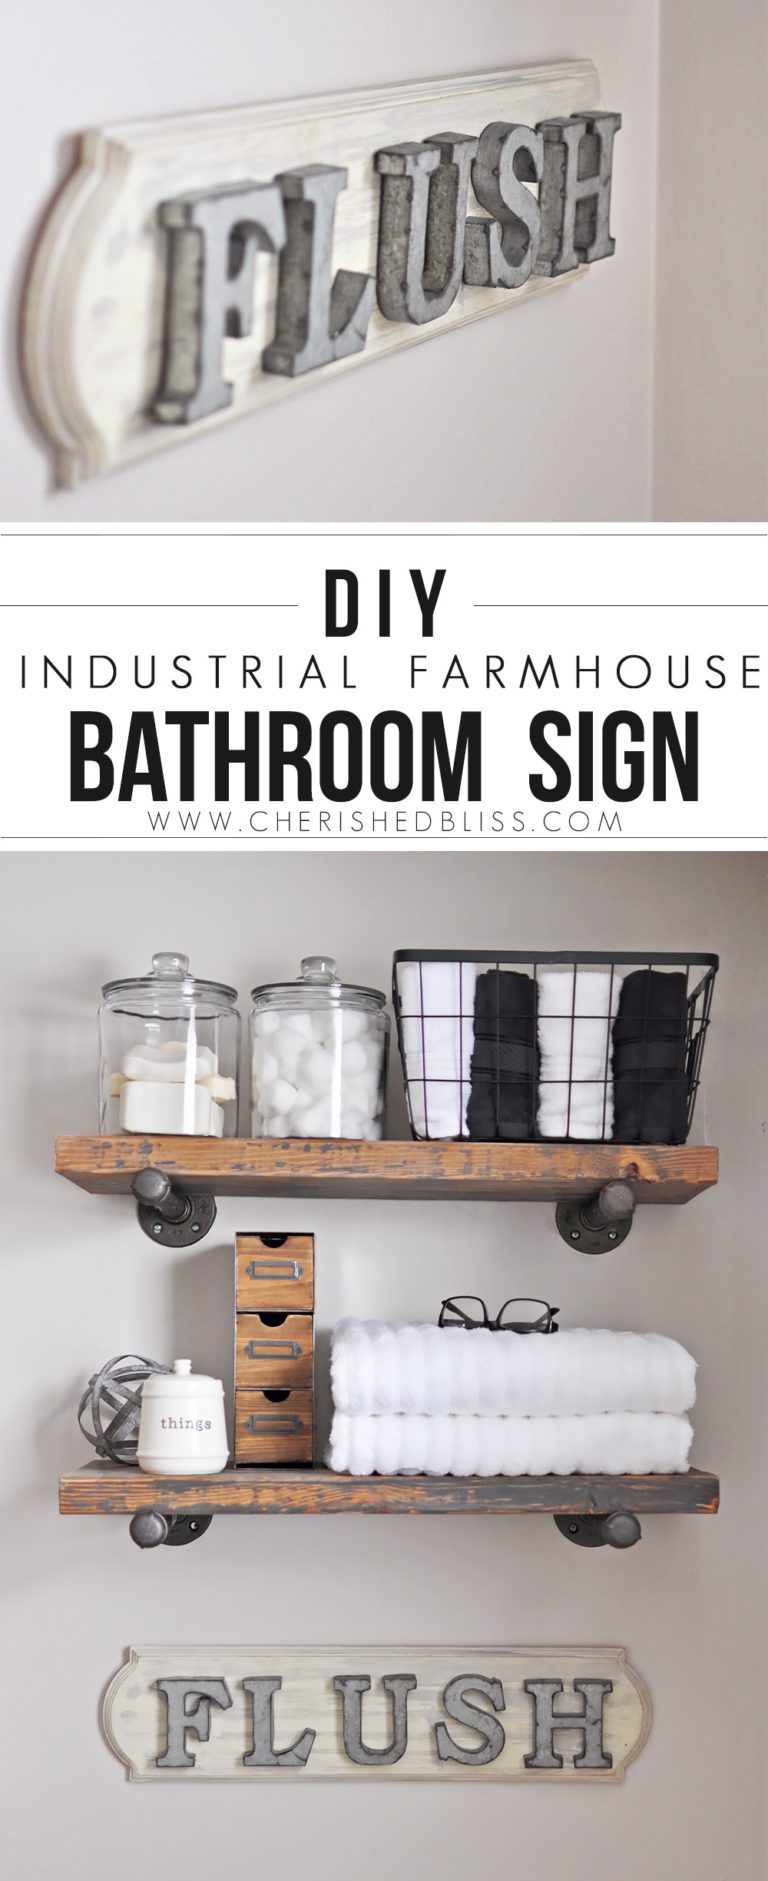 15 wonderful DIY bathroom ideas that you can create in no time